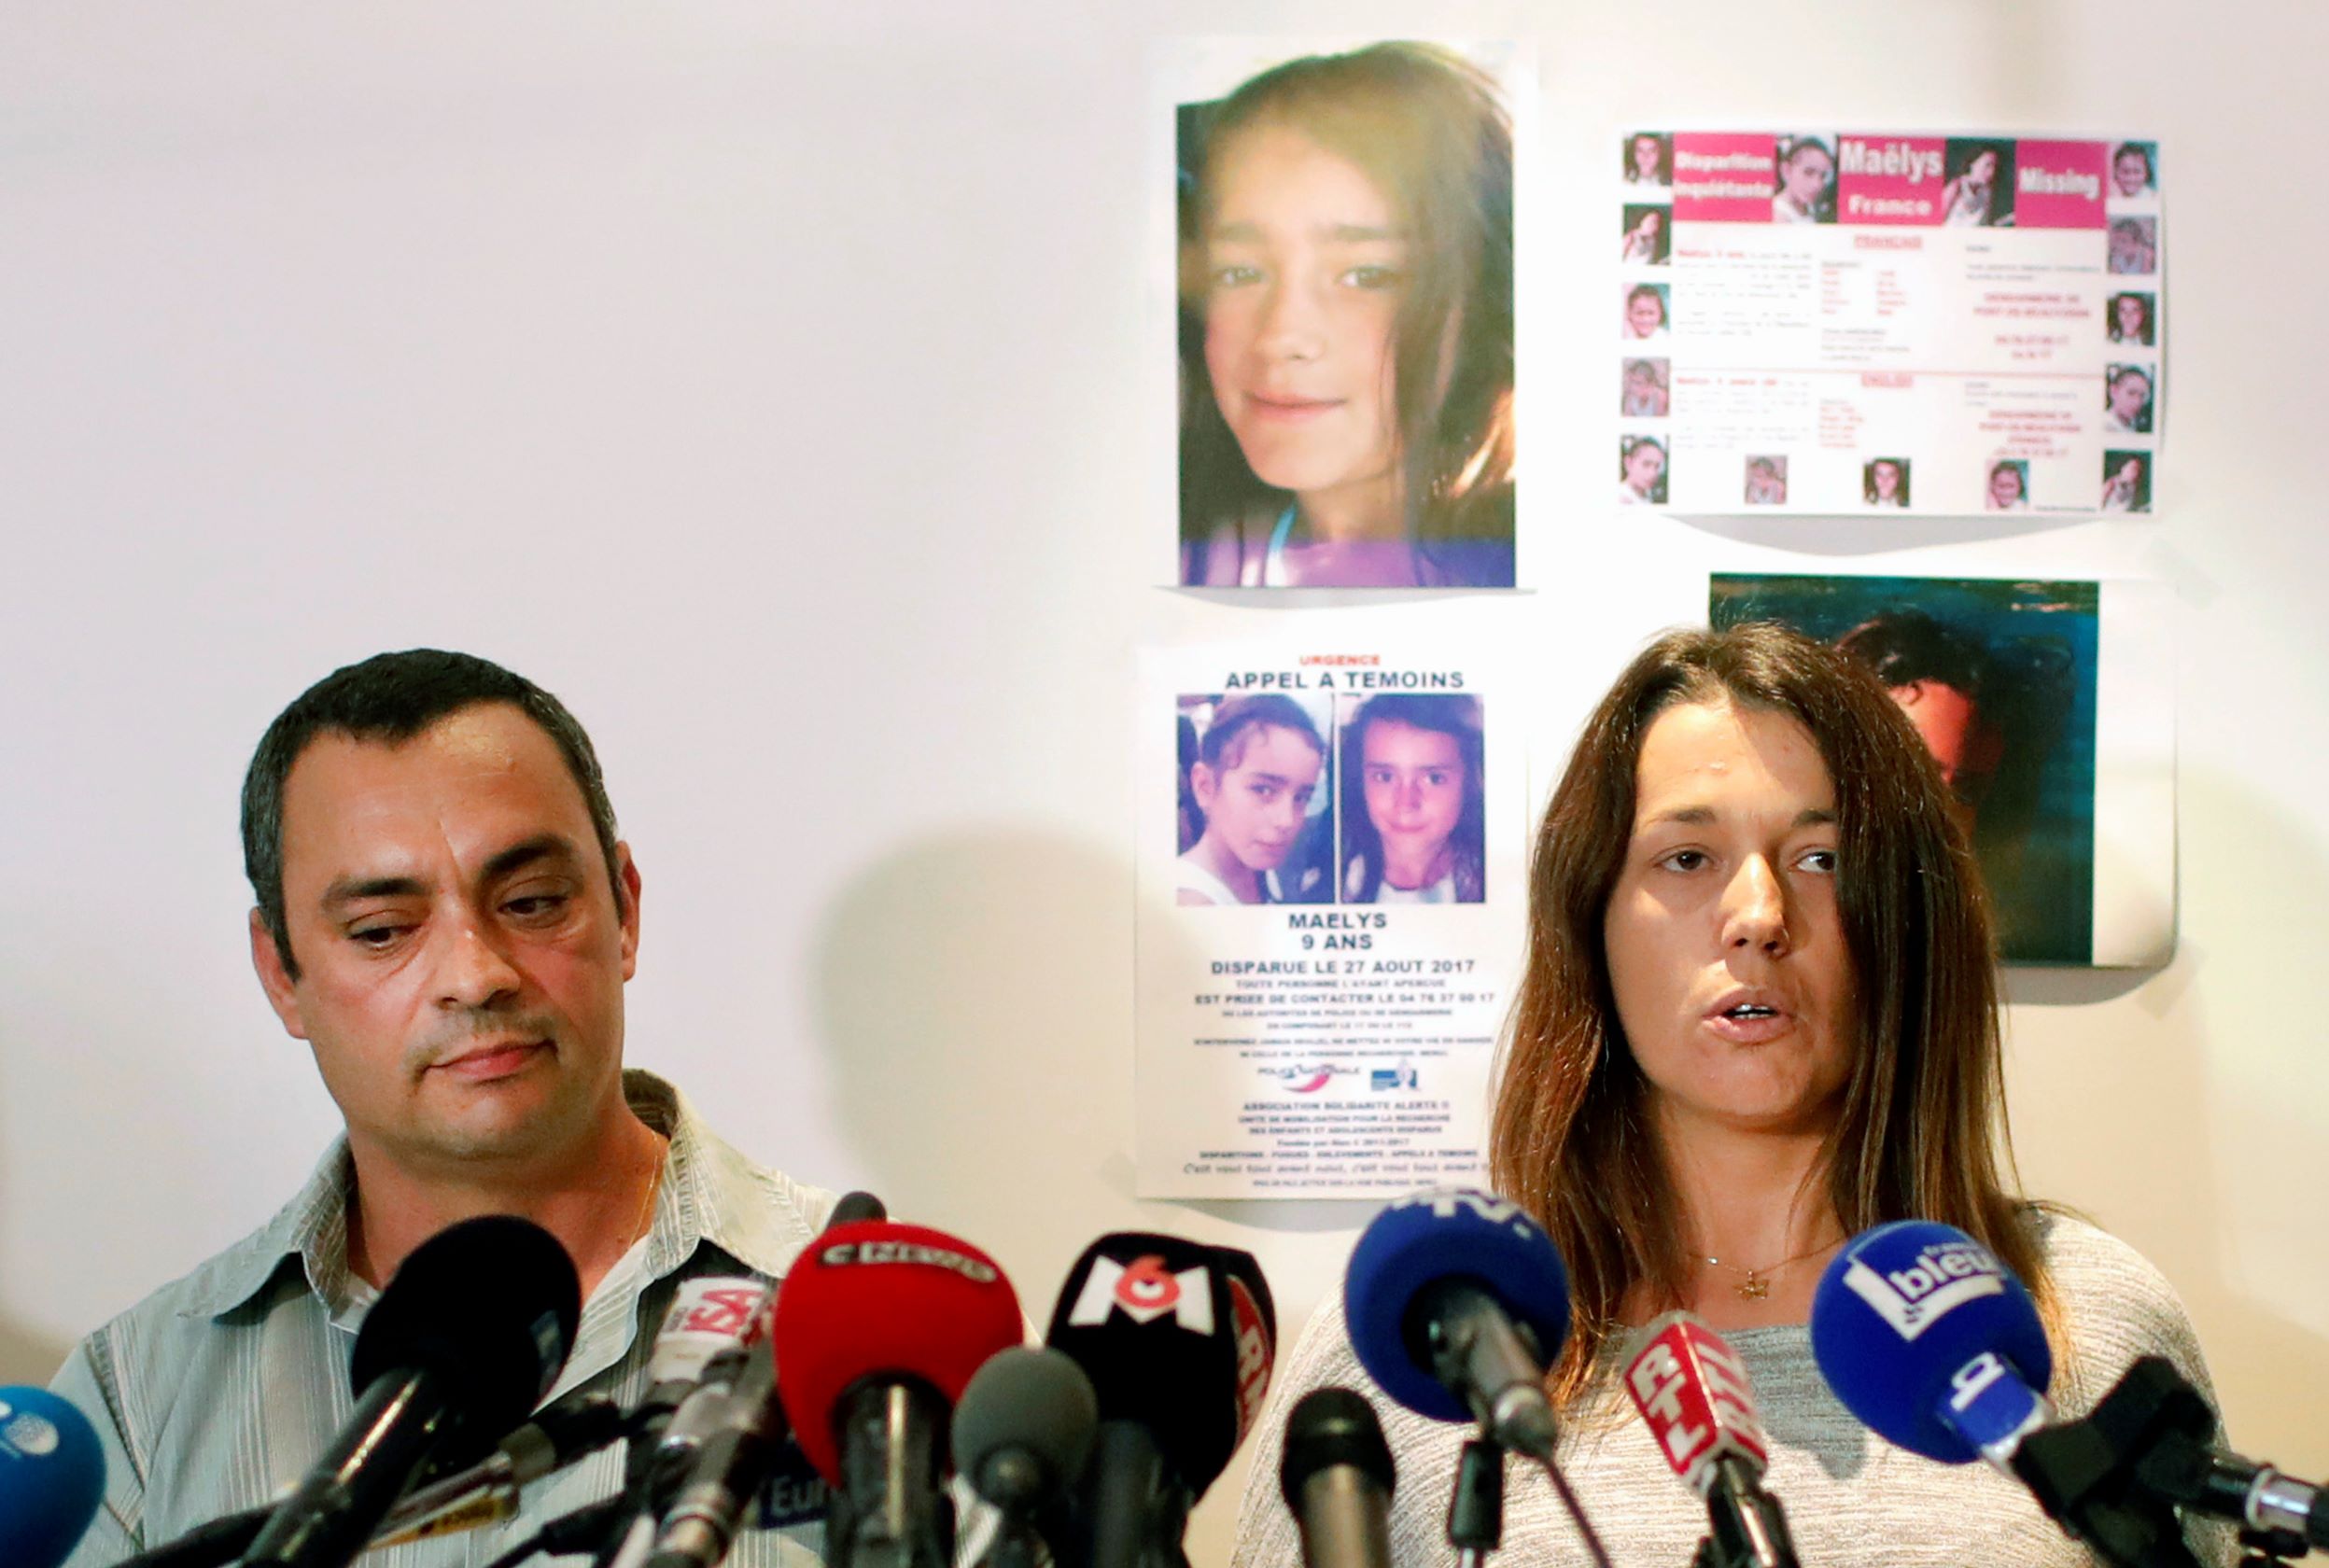 The murdered girl's father, Meiris, Joachim de Araujo (left) and his wife, Jennifer